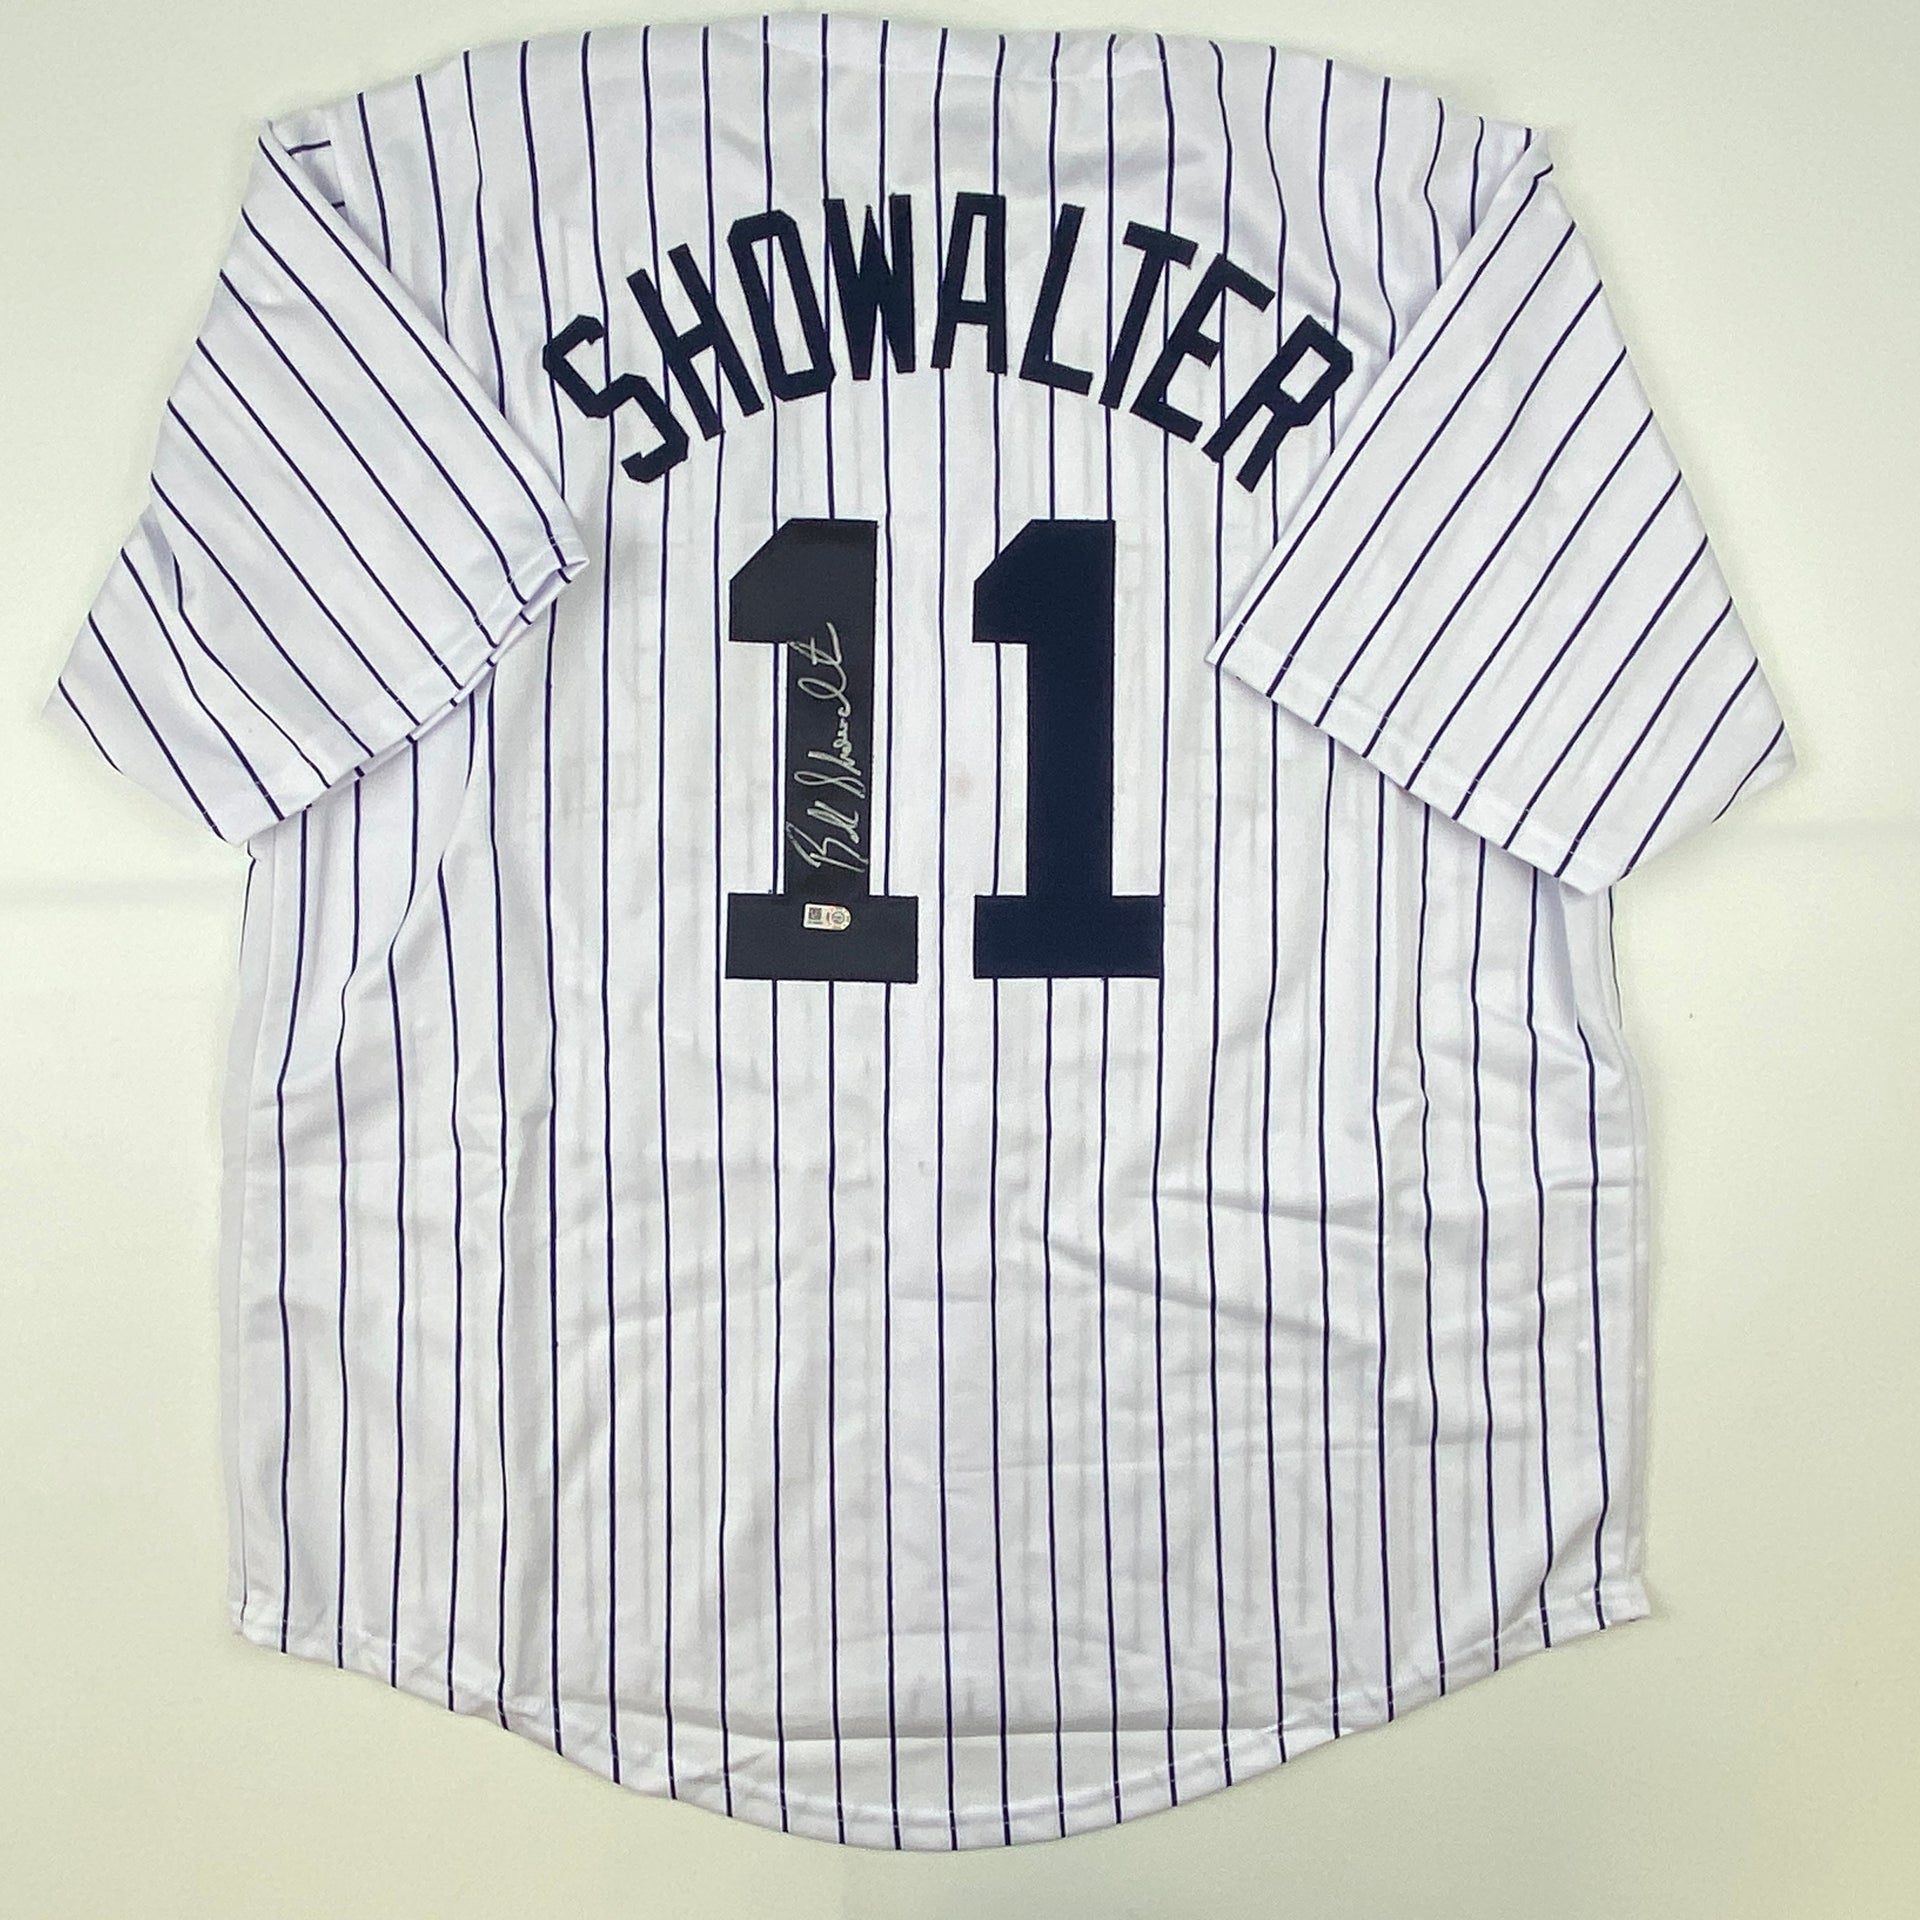 Autographed/Signed Buck Showalter New York Pinstripe Baseball